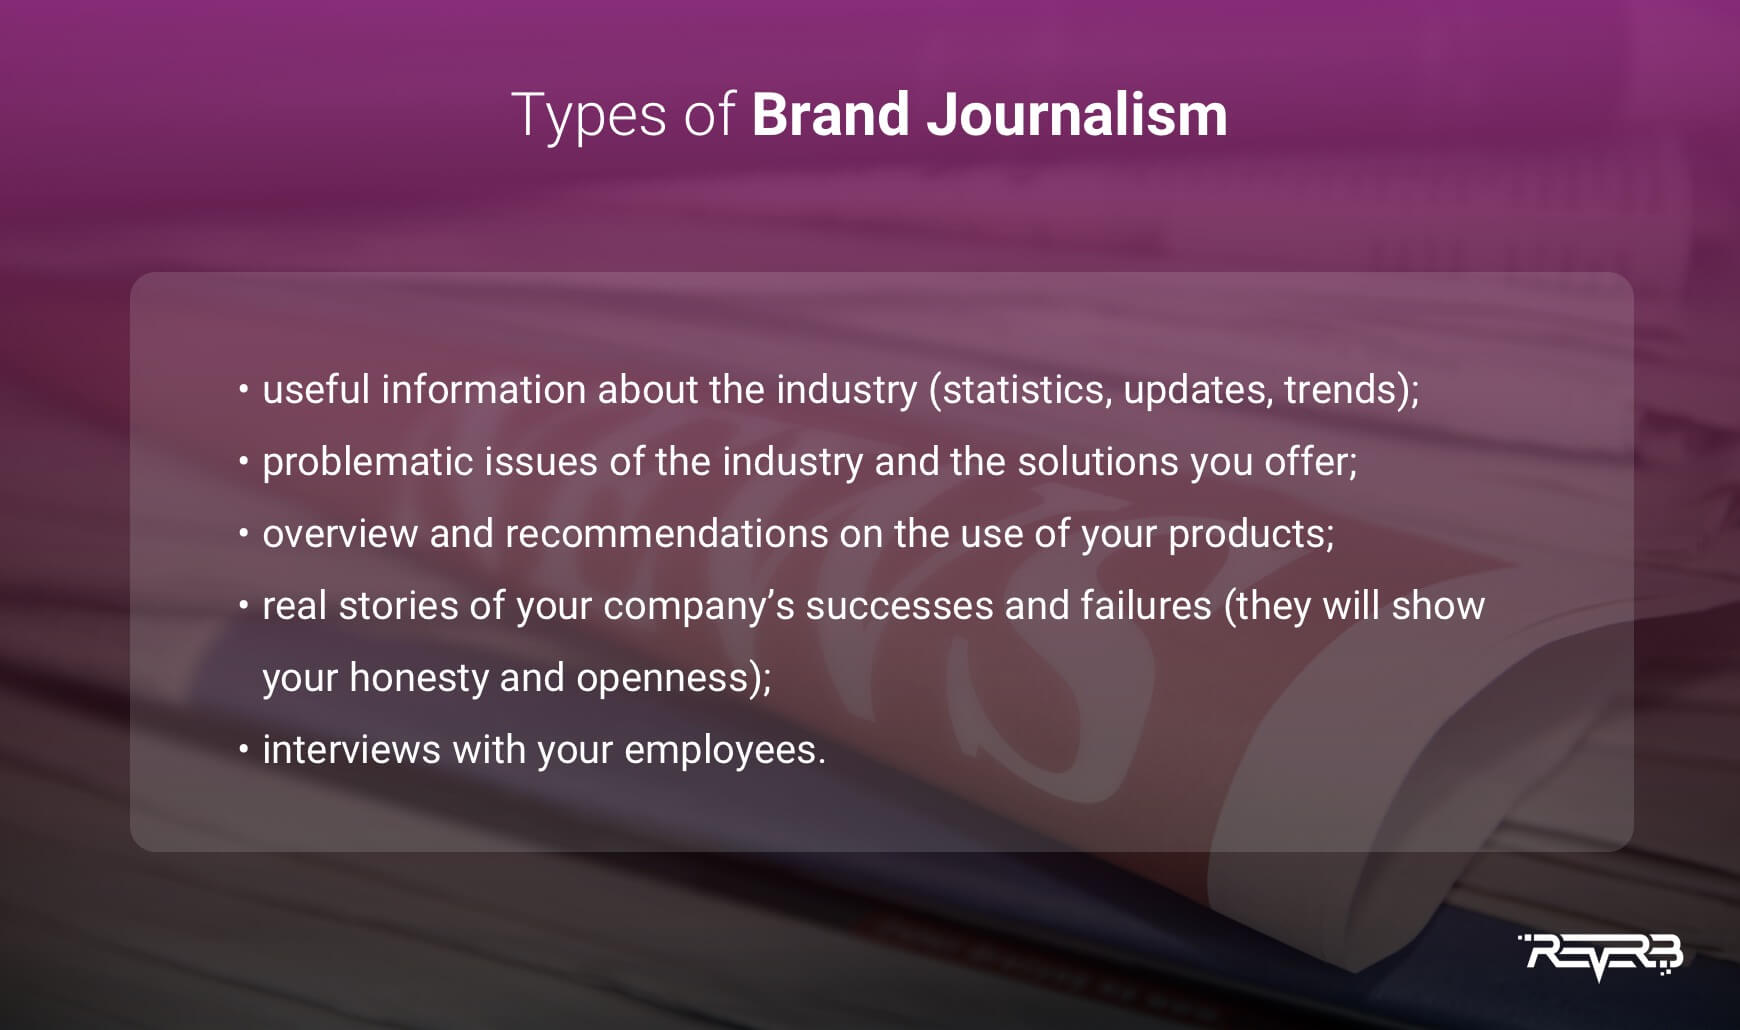 types of brand journalism